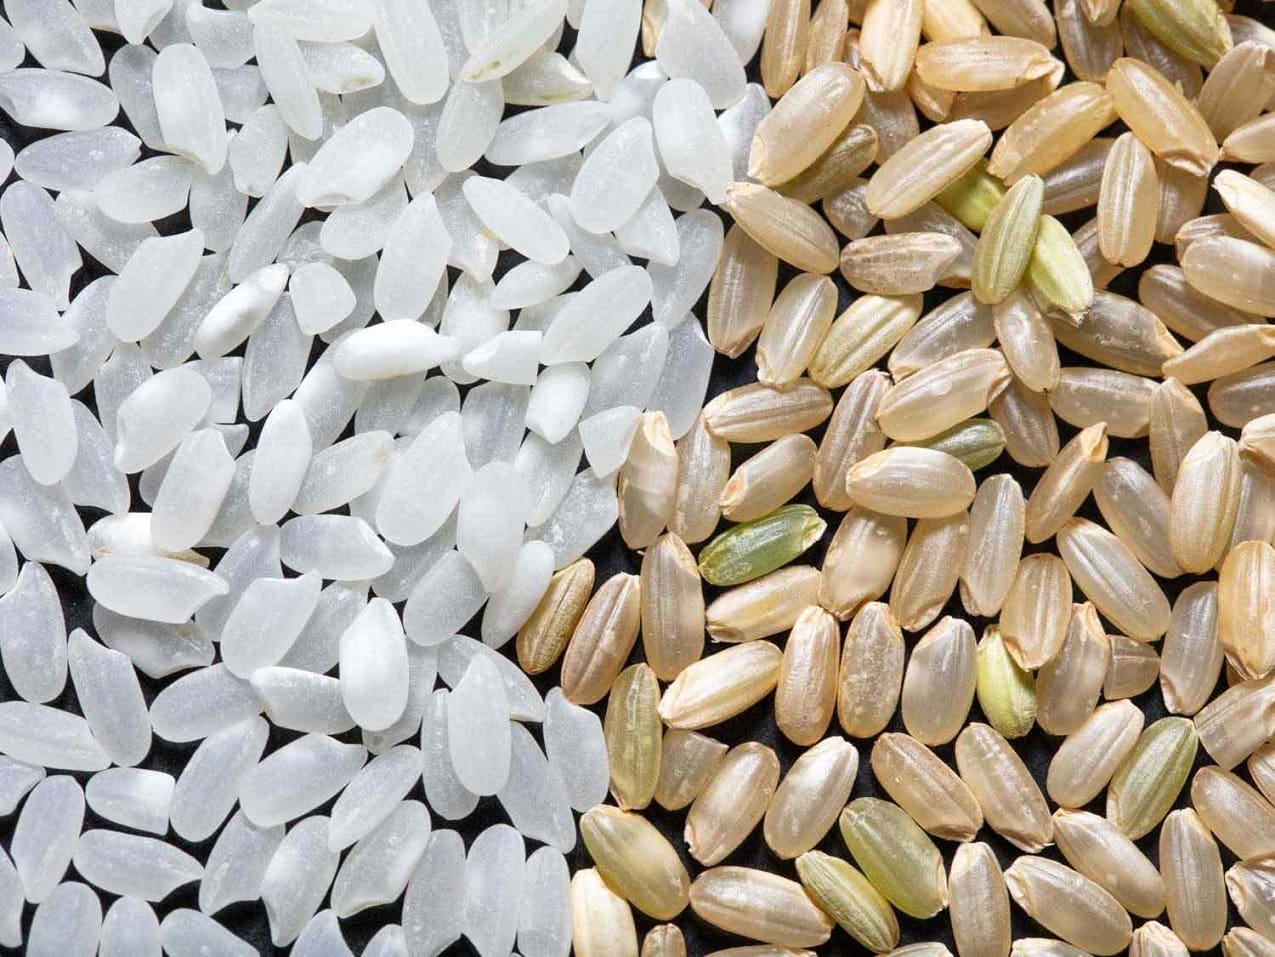 Bomba Rice vs. Arborio Rice: What’s The Difference?